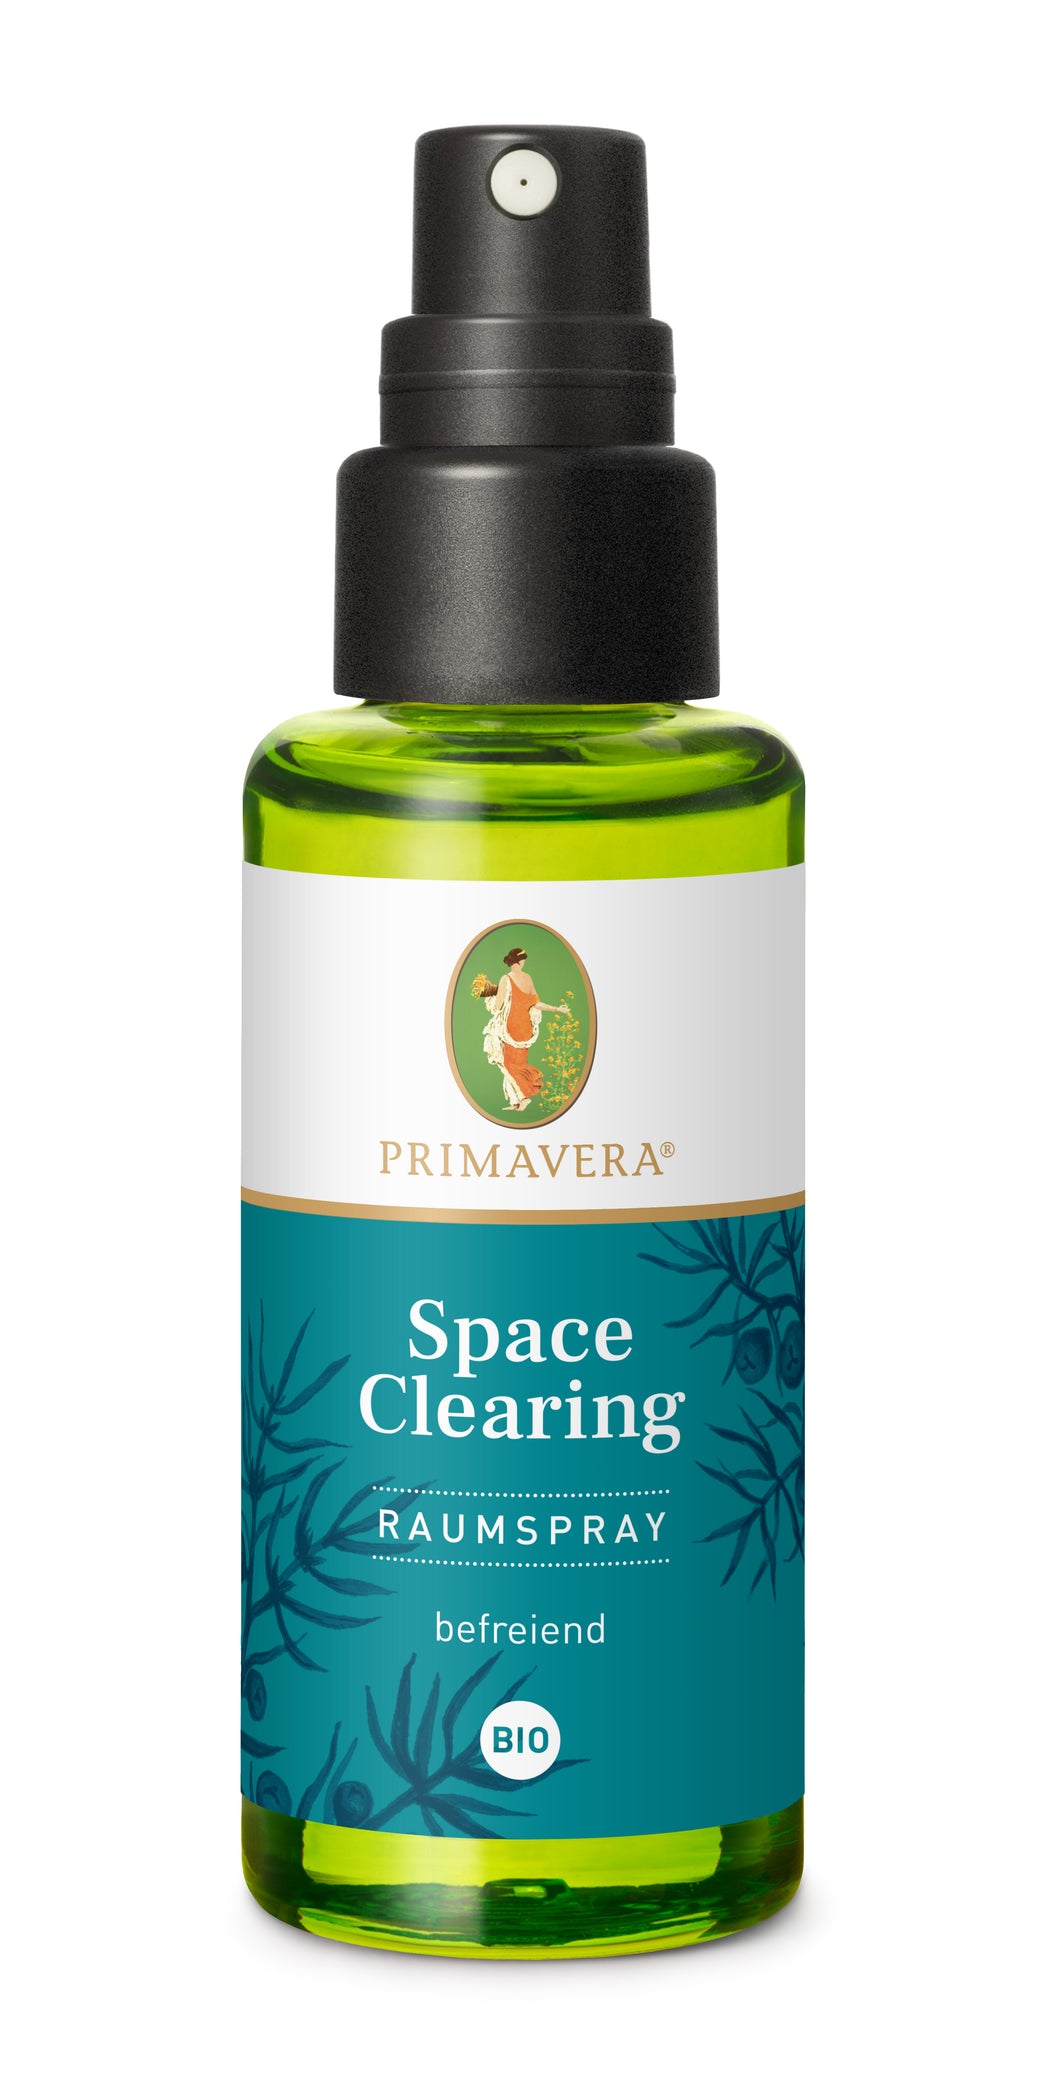 Space Clearing Raumspray